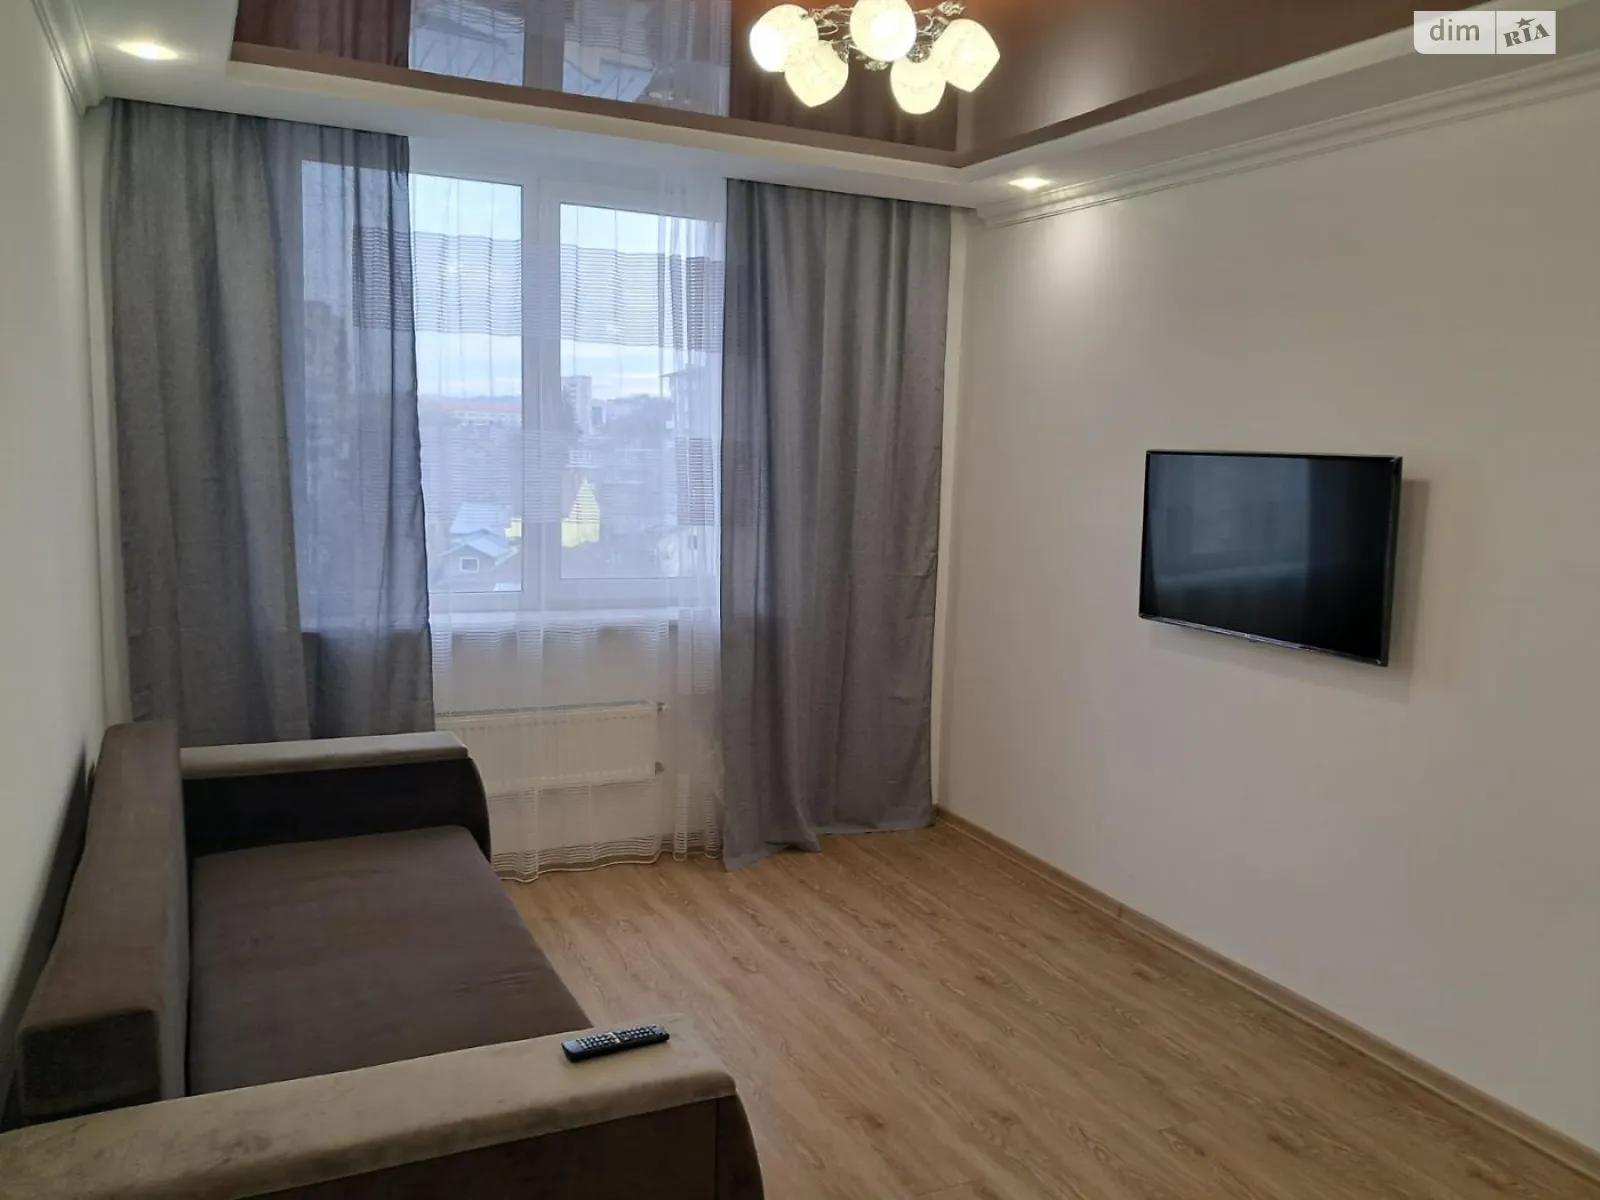 Сдается в аренду 1-комнатная квартира 40 кв. м в Львове, масарика струмок, 13 - фото 1